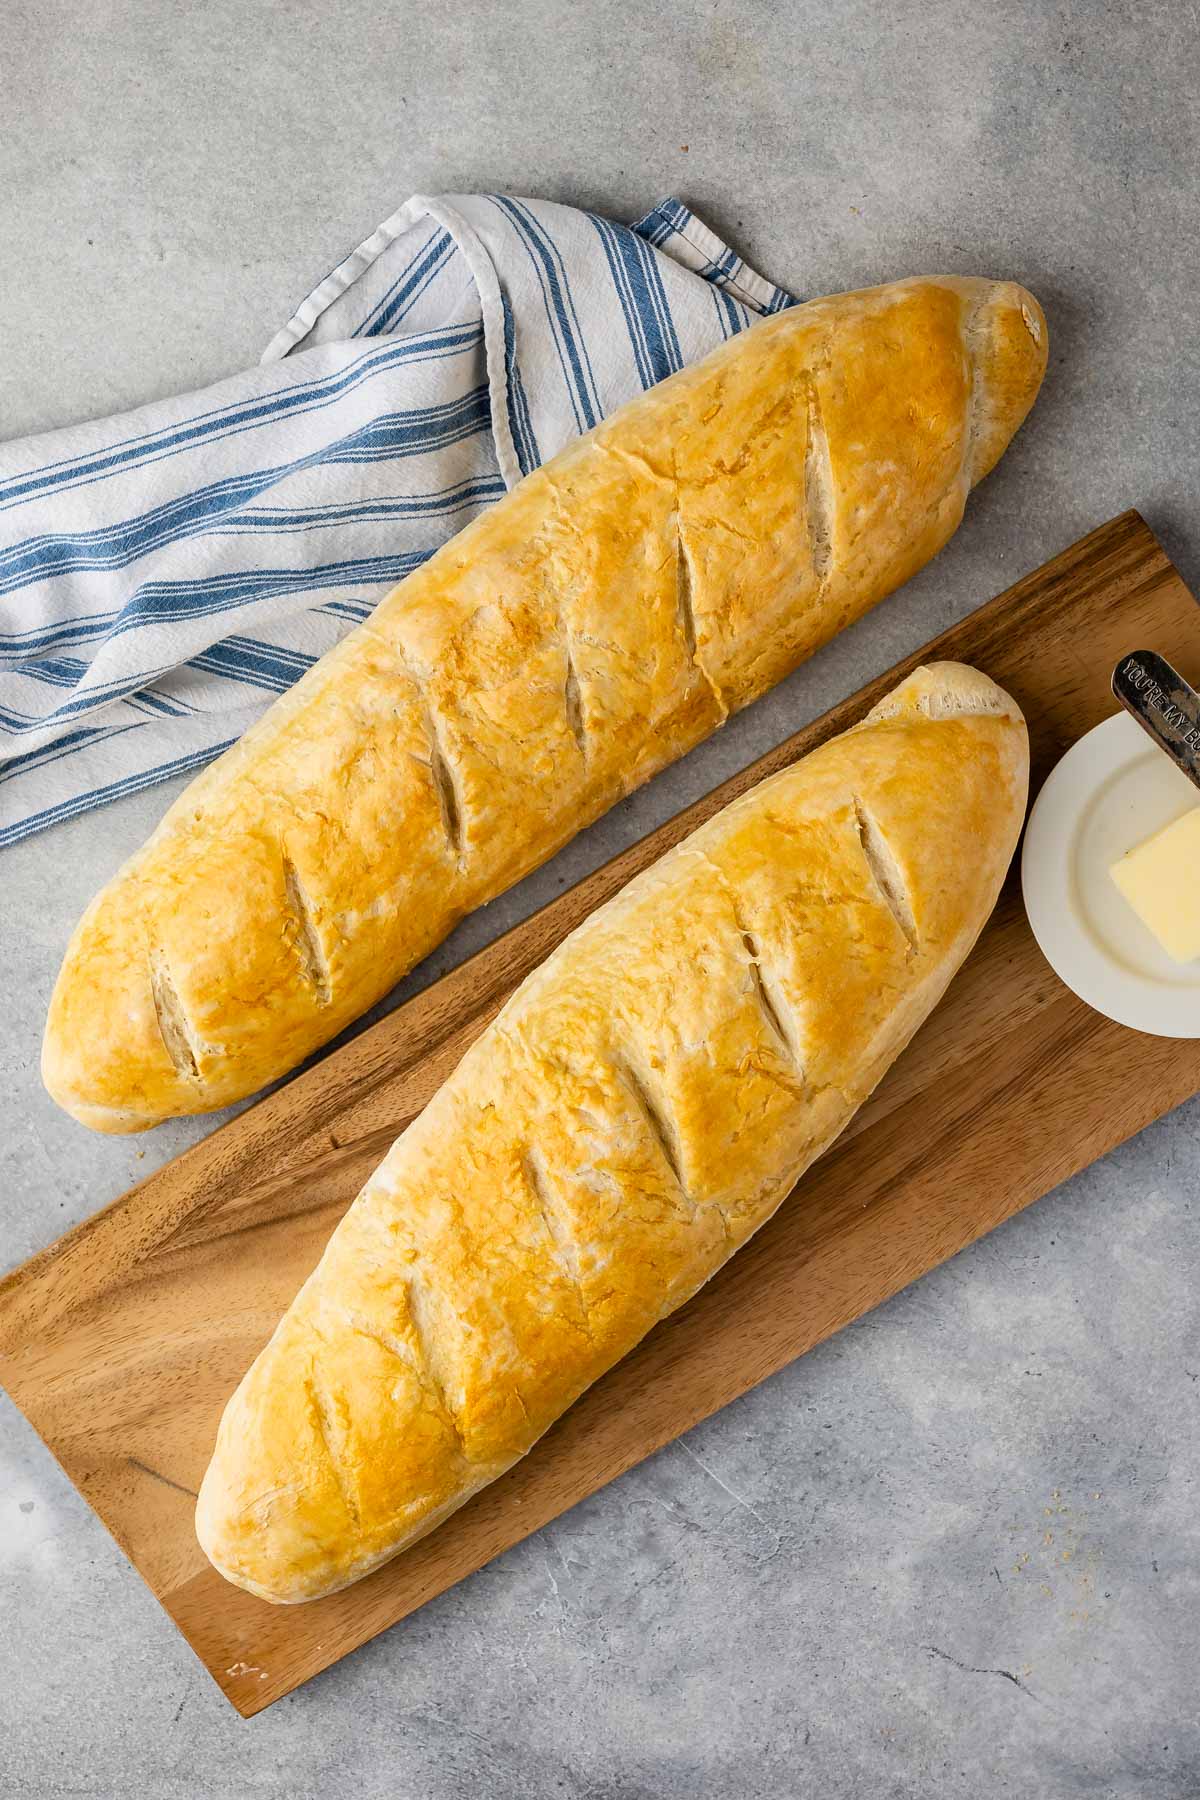 https://www.crazyforcrust.com/wp-content/uploads/2020/03/french-bread-recipe-1-2.jpg